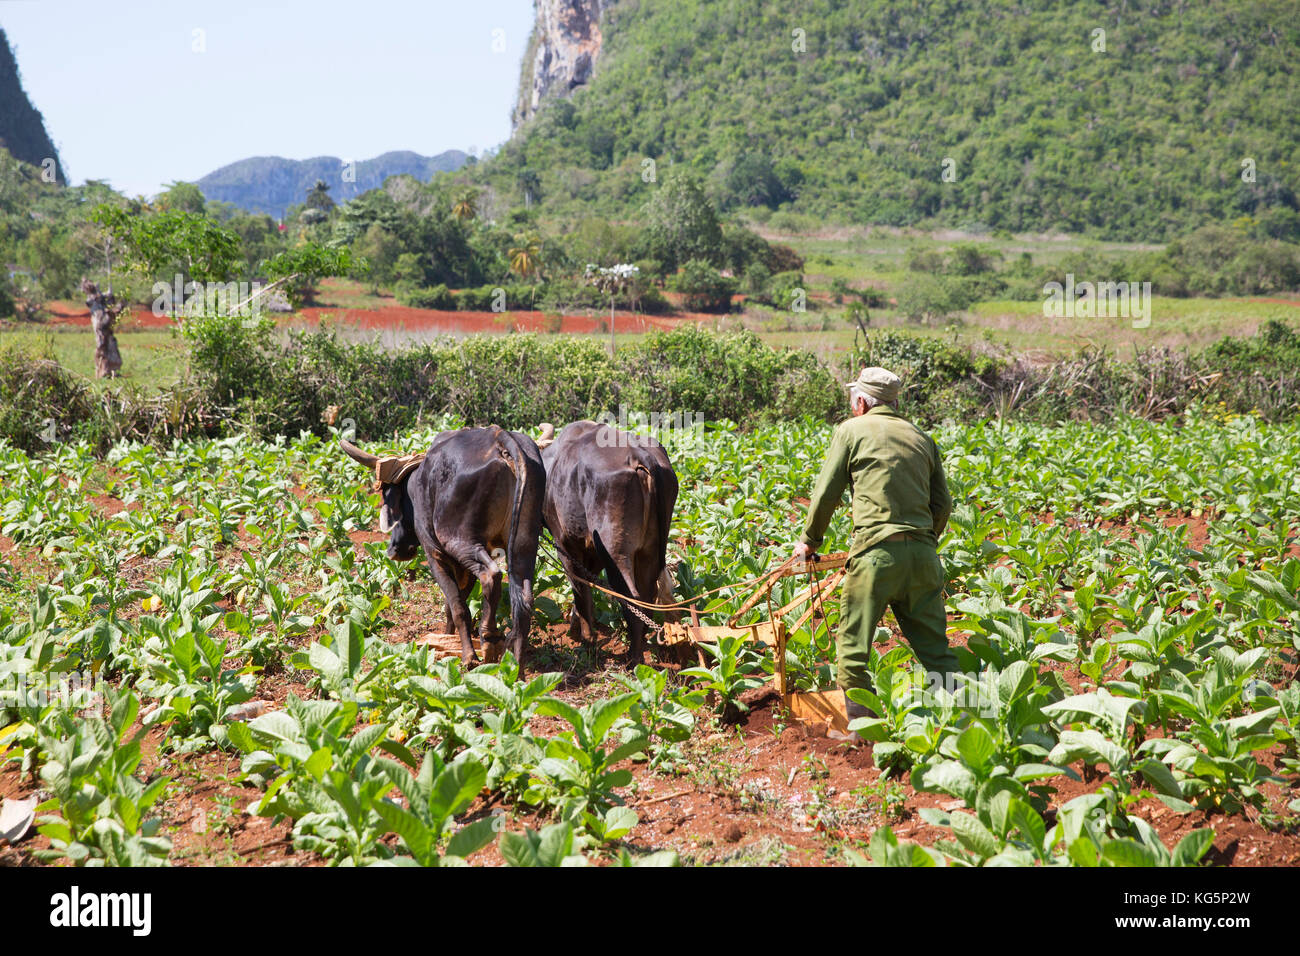 Kuba, Republik Kuba, Mittelamerika, Karibische Insel. Havanna. Tabakfarm in Pinal dal Rio, Kuh, Kühe bei der Arbeit, Mann, Mann bei der Arbeit. Stockfoto